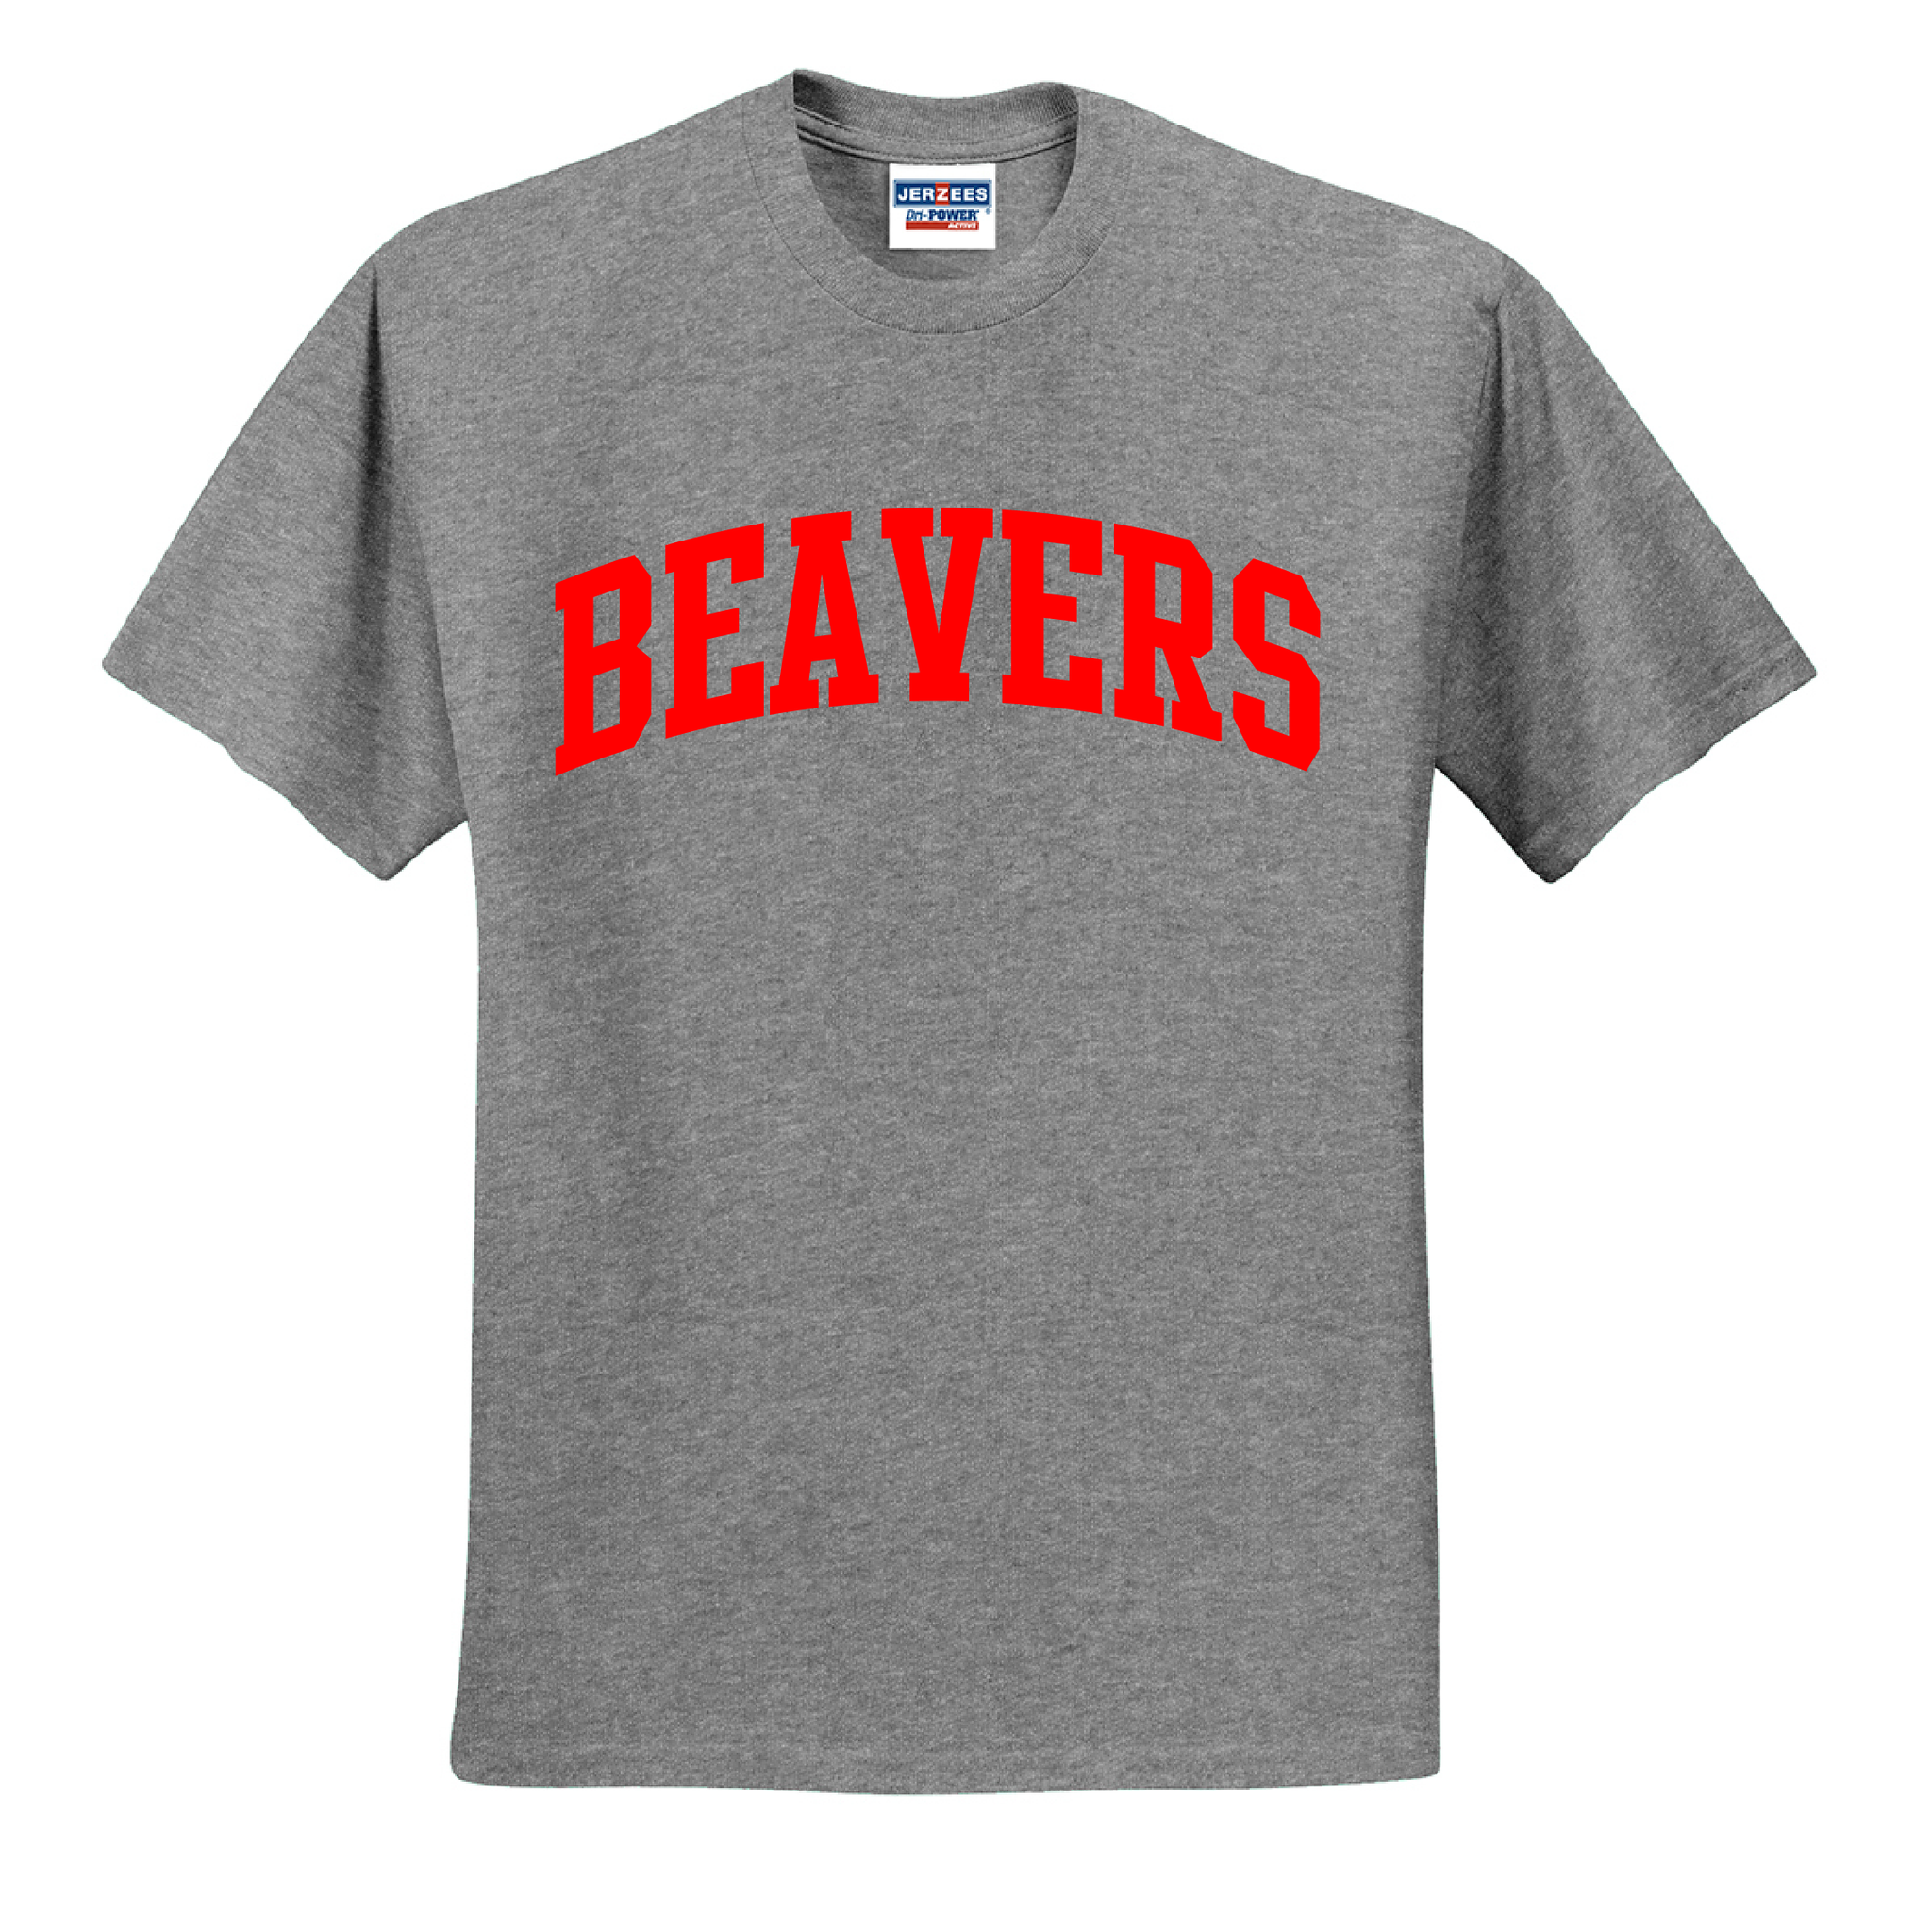 Patterson Beavers Team T-Shirt